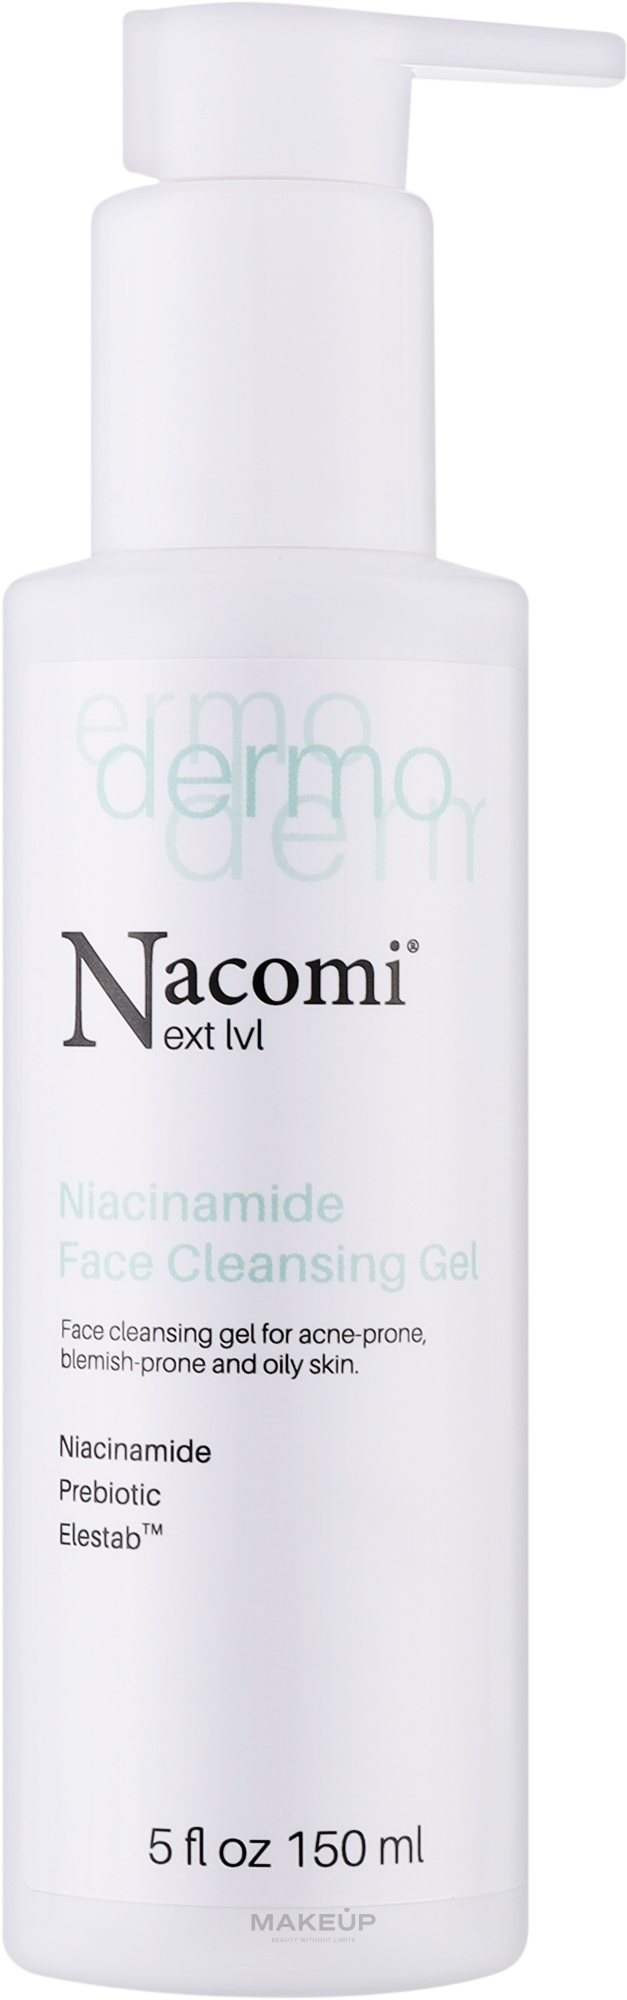 Face Cleansing Gel - Nacomi Next Level Dermo Niacinamide Facial Cleansing Gel — photo 150 ml